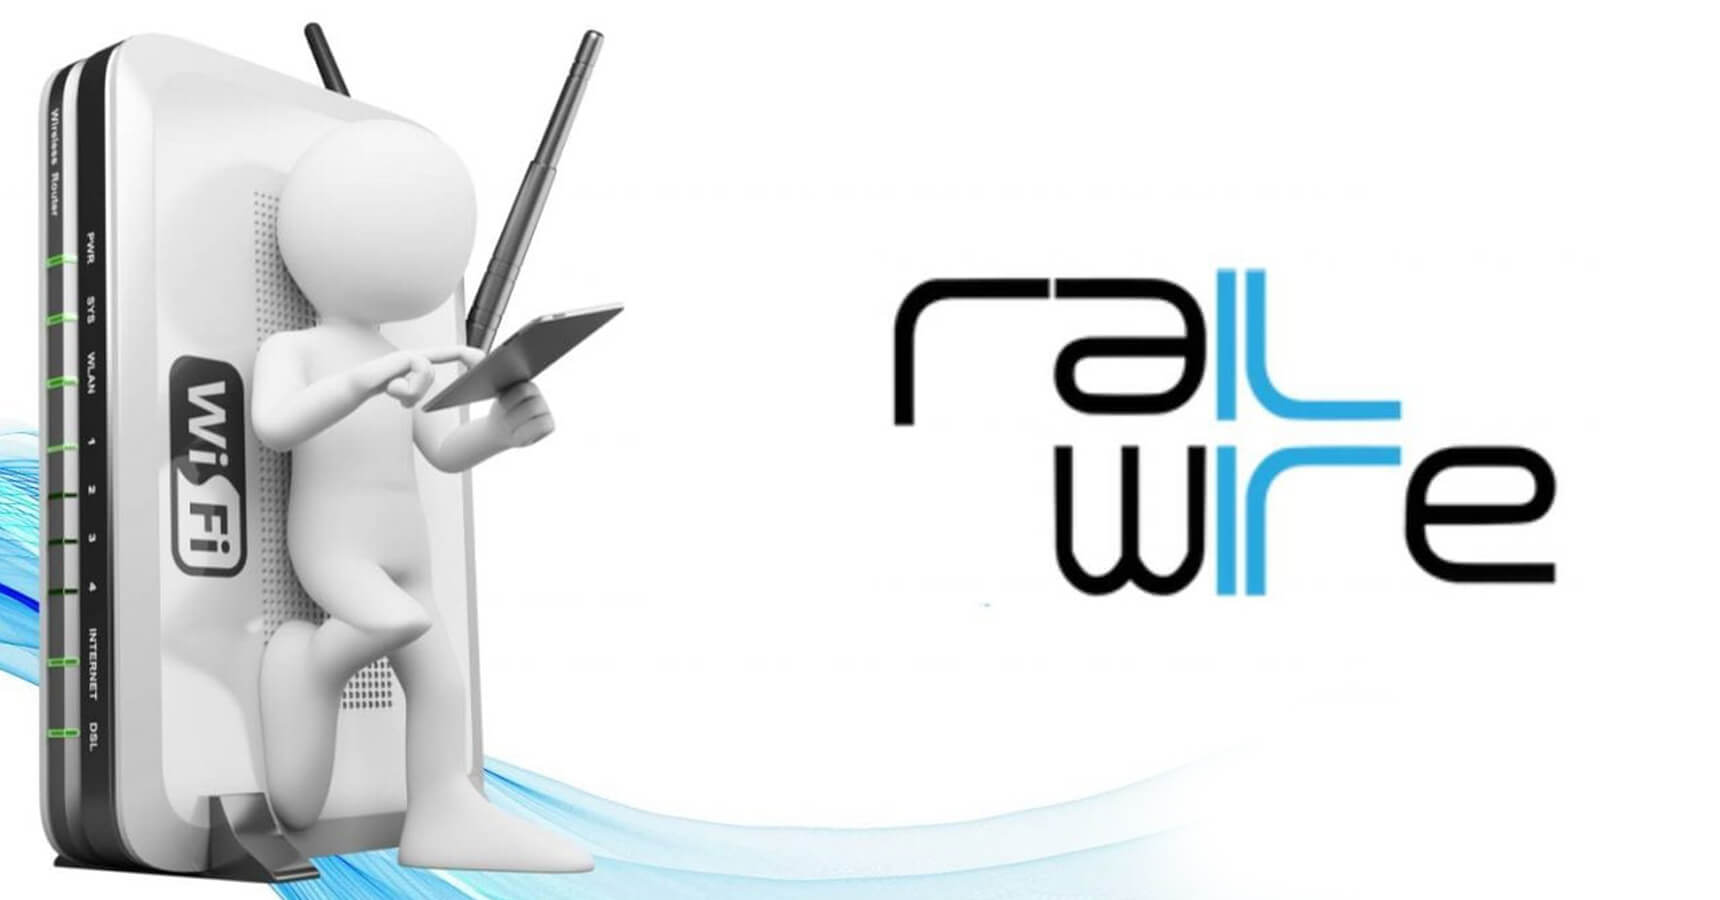 Railwire launch rs 199 Broadband Plan